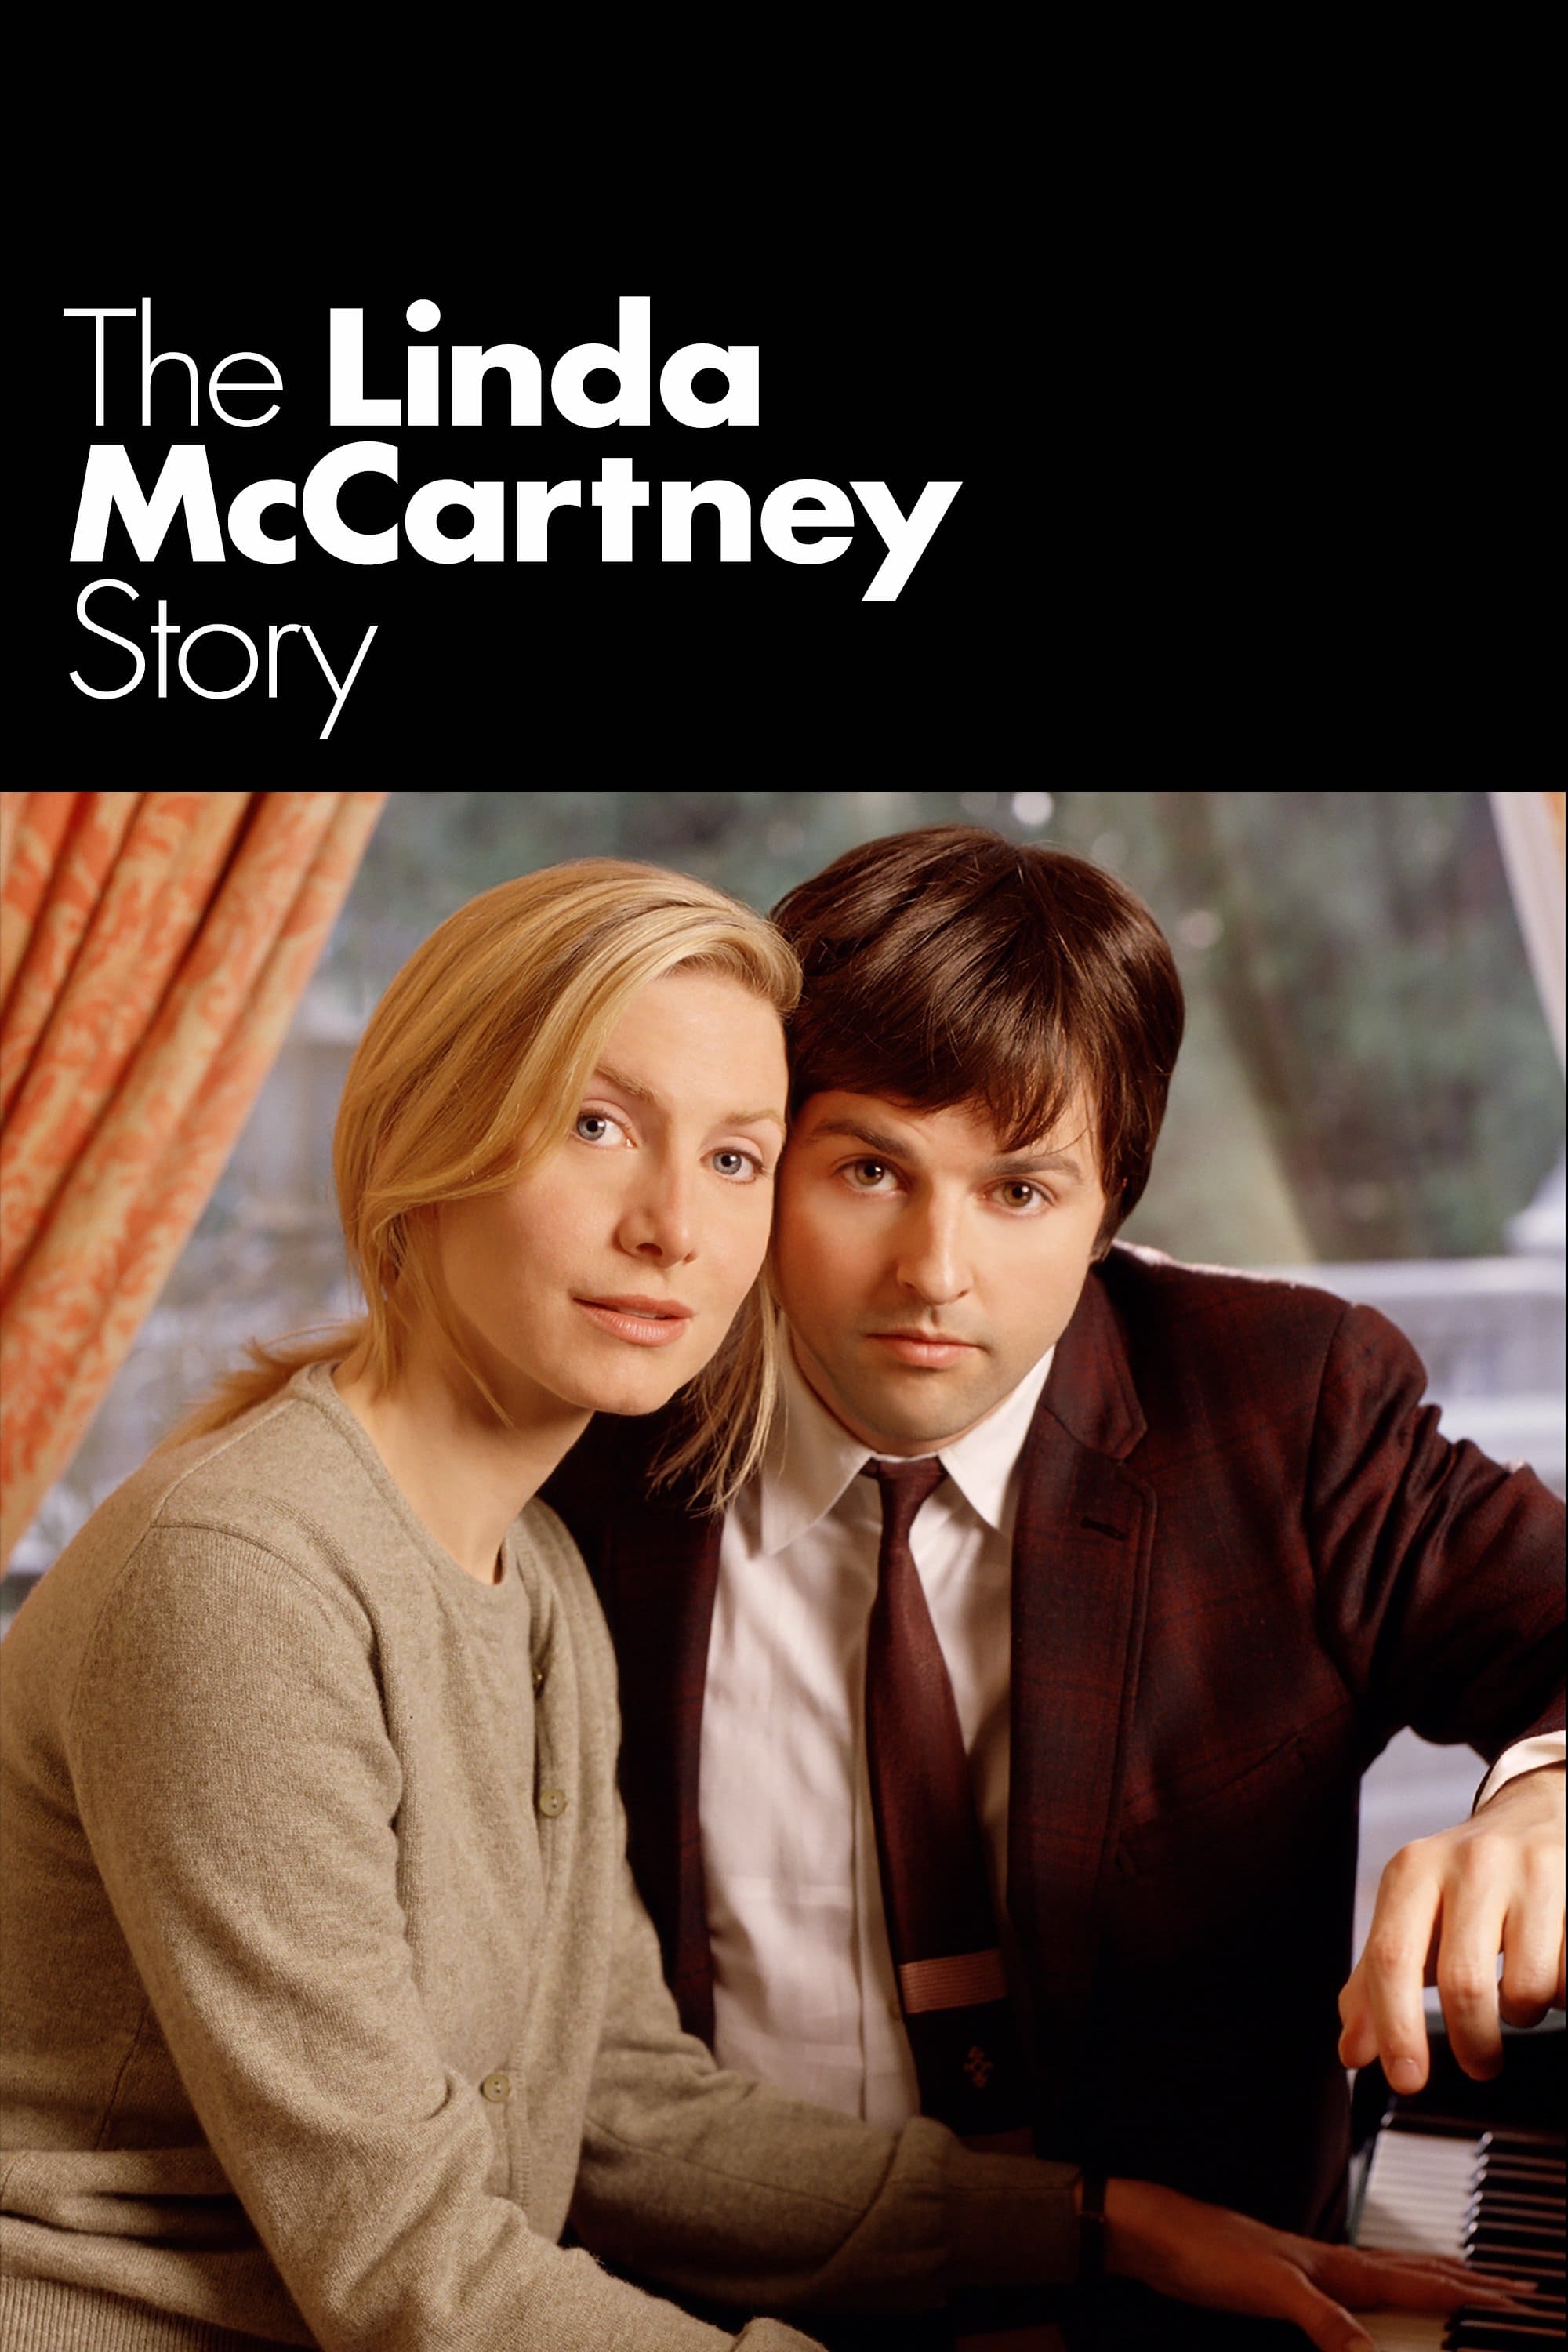 The Linda McCartney Story film